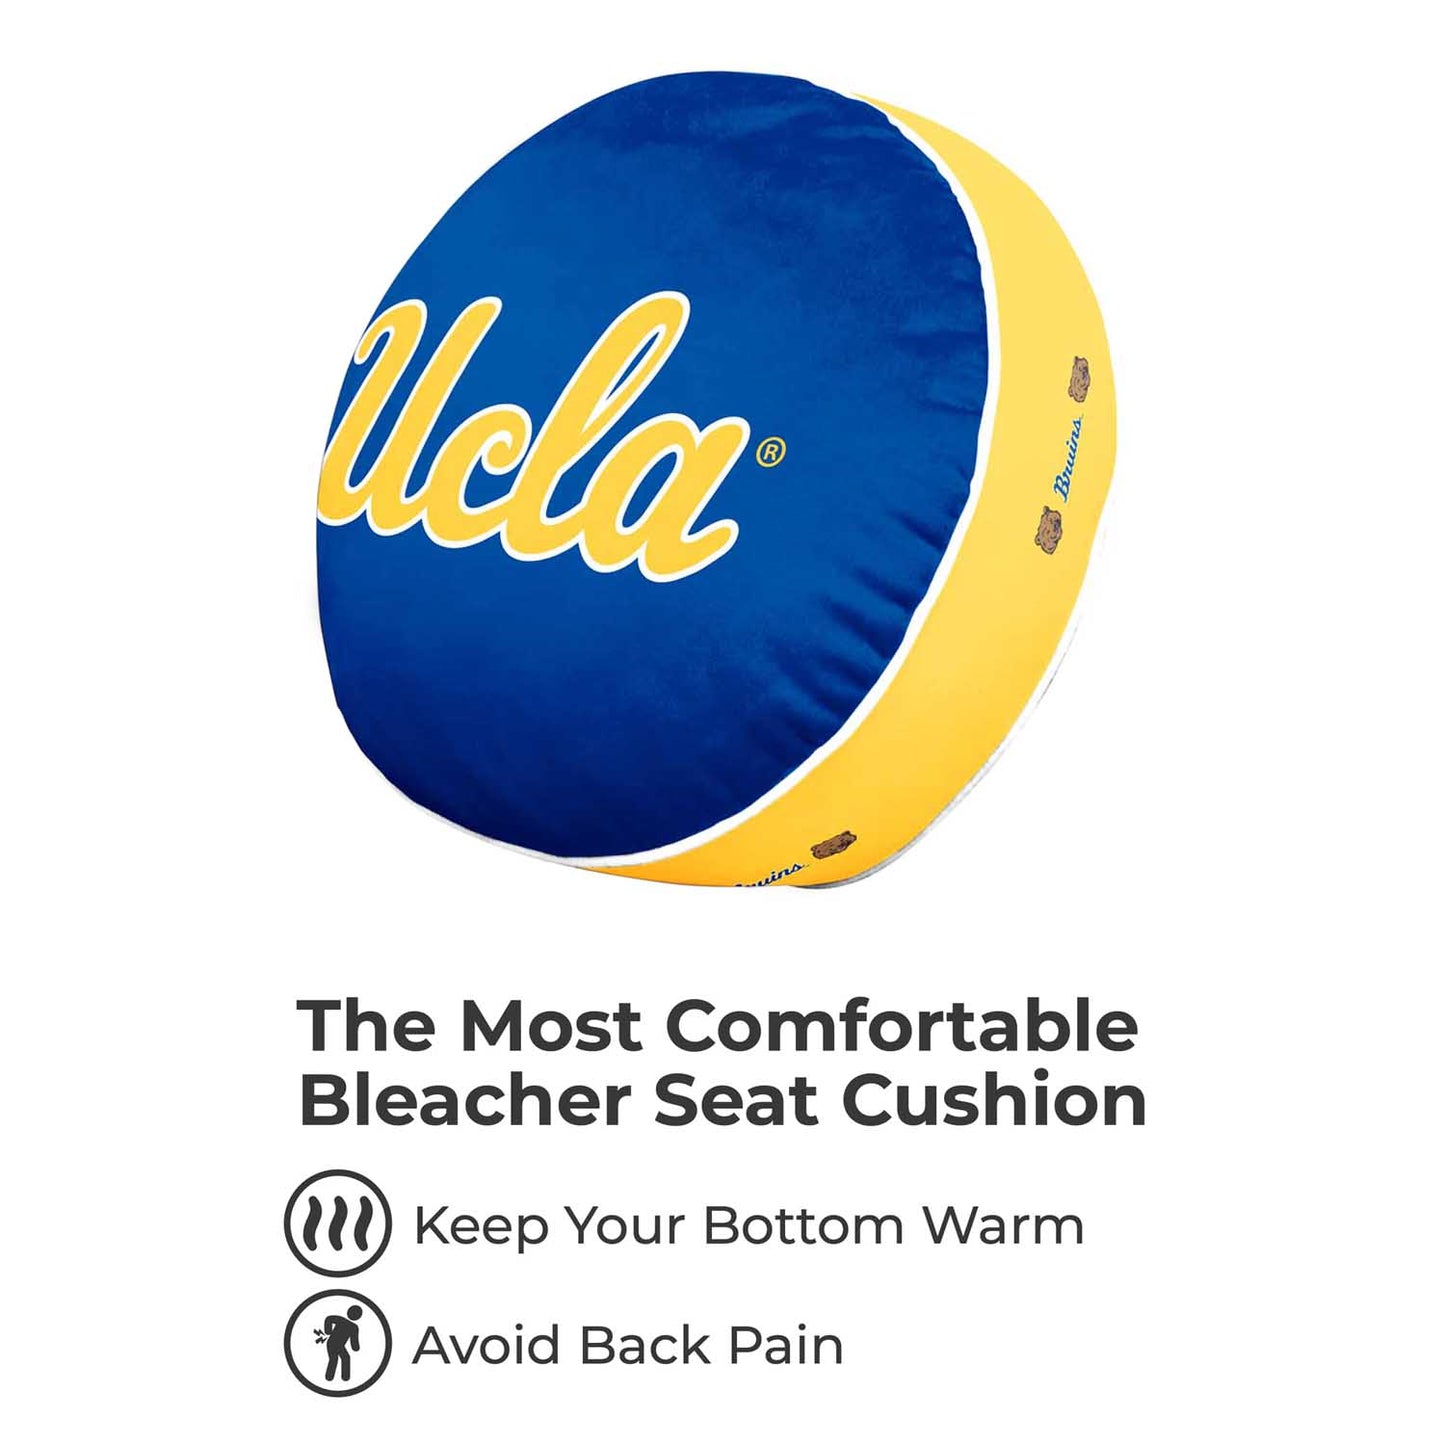 UCLA Bruins Team Logo 15 Inch Ultra Soft Stretch Plush Pillow - Blue